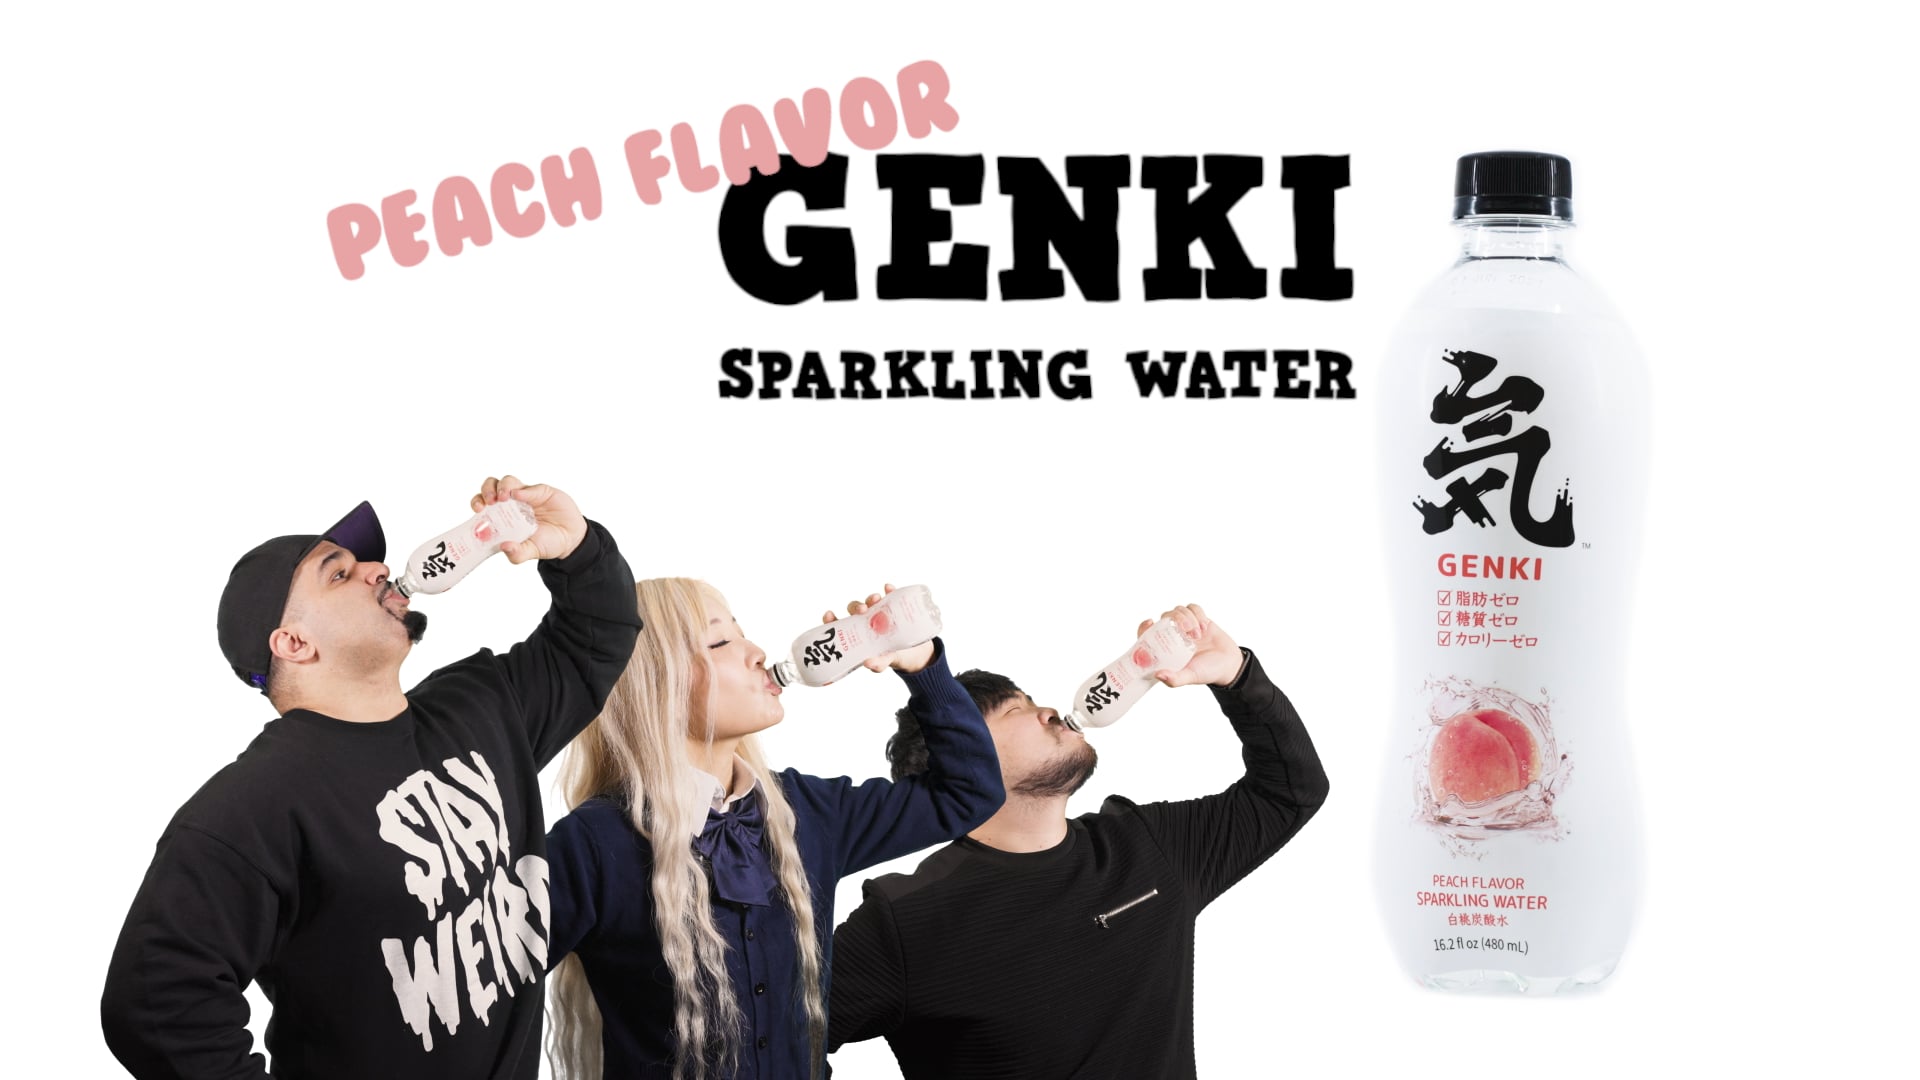 Low fat low sugar low calorie drink Genki Sparkling Water